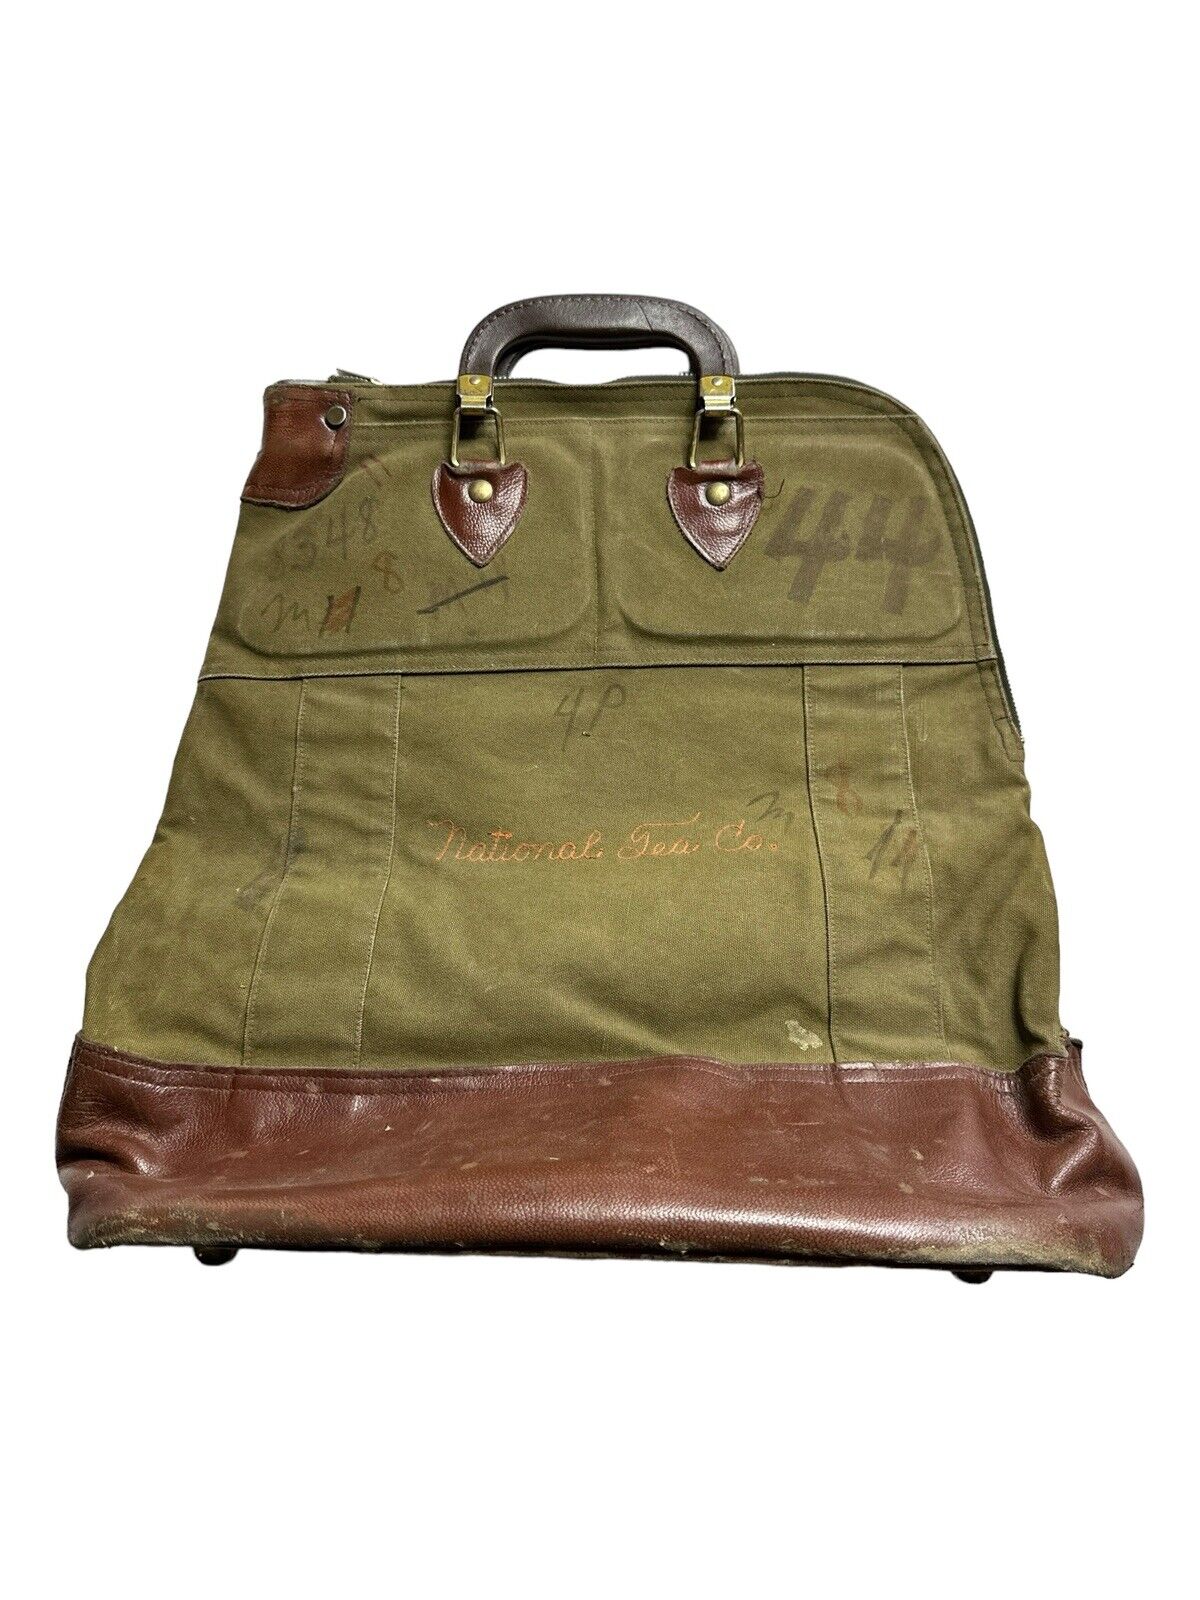 1930s 1920s Zipper Bank Bag Chain Stitched National Tea Co Leather Vtg Talon Zip